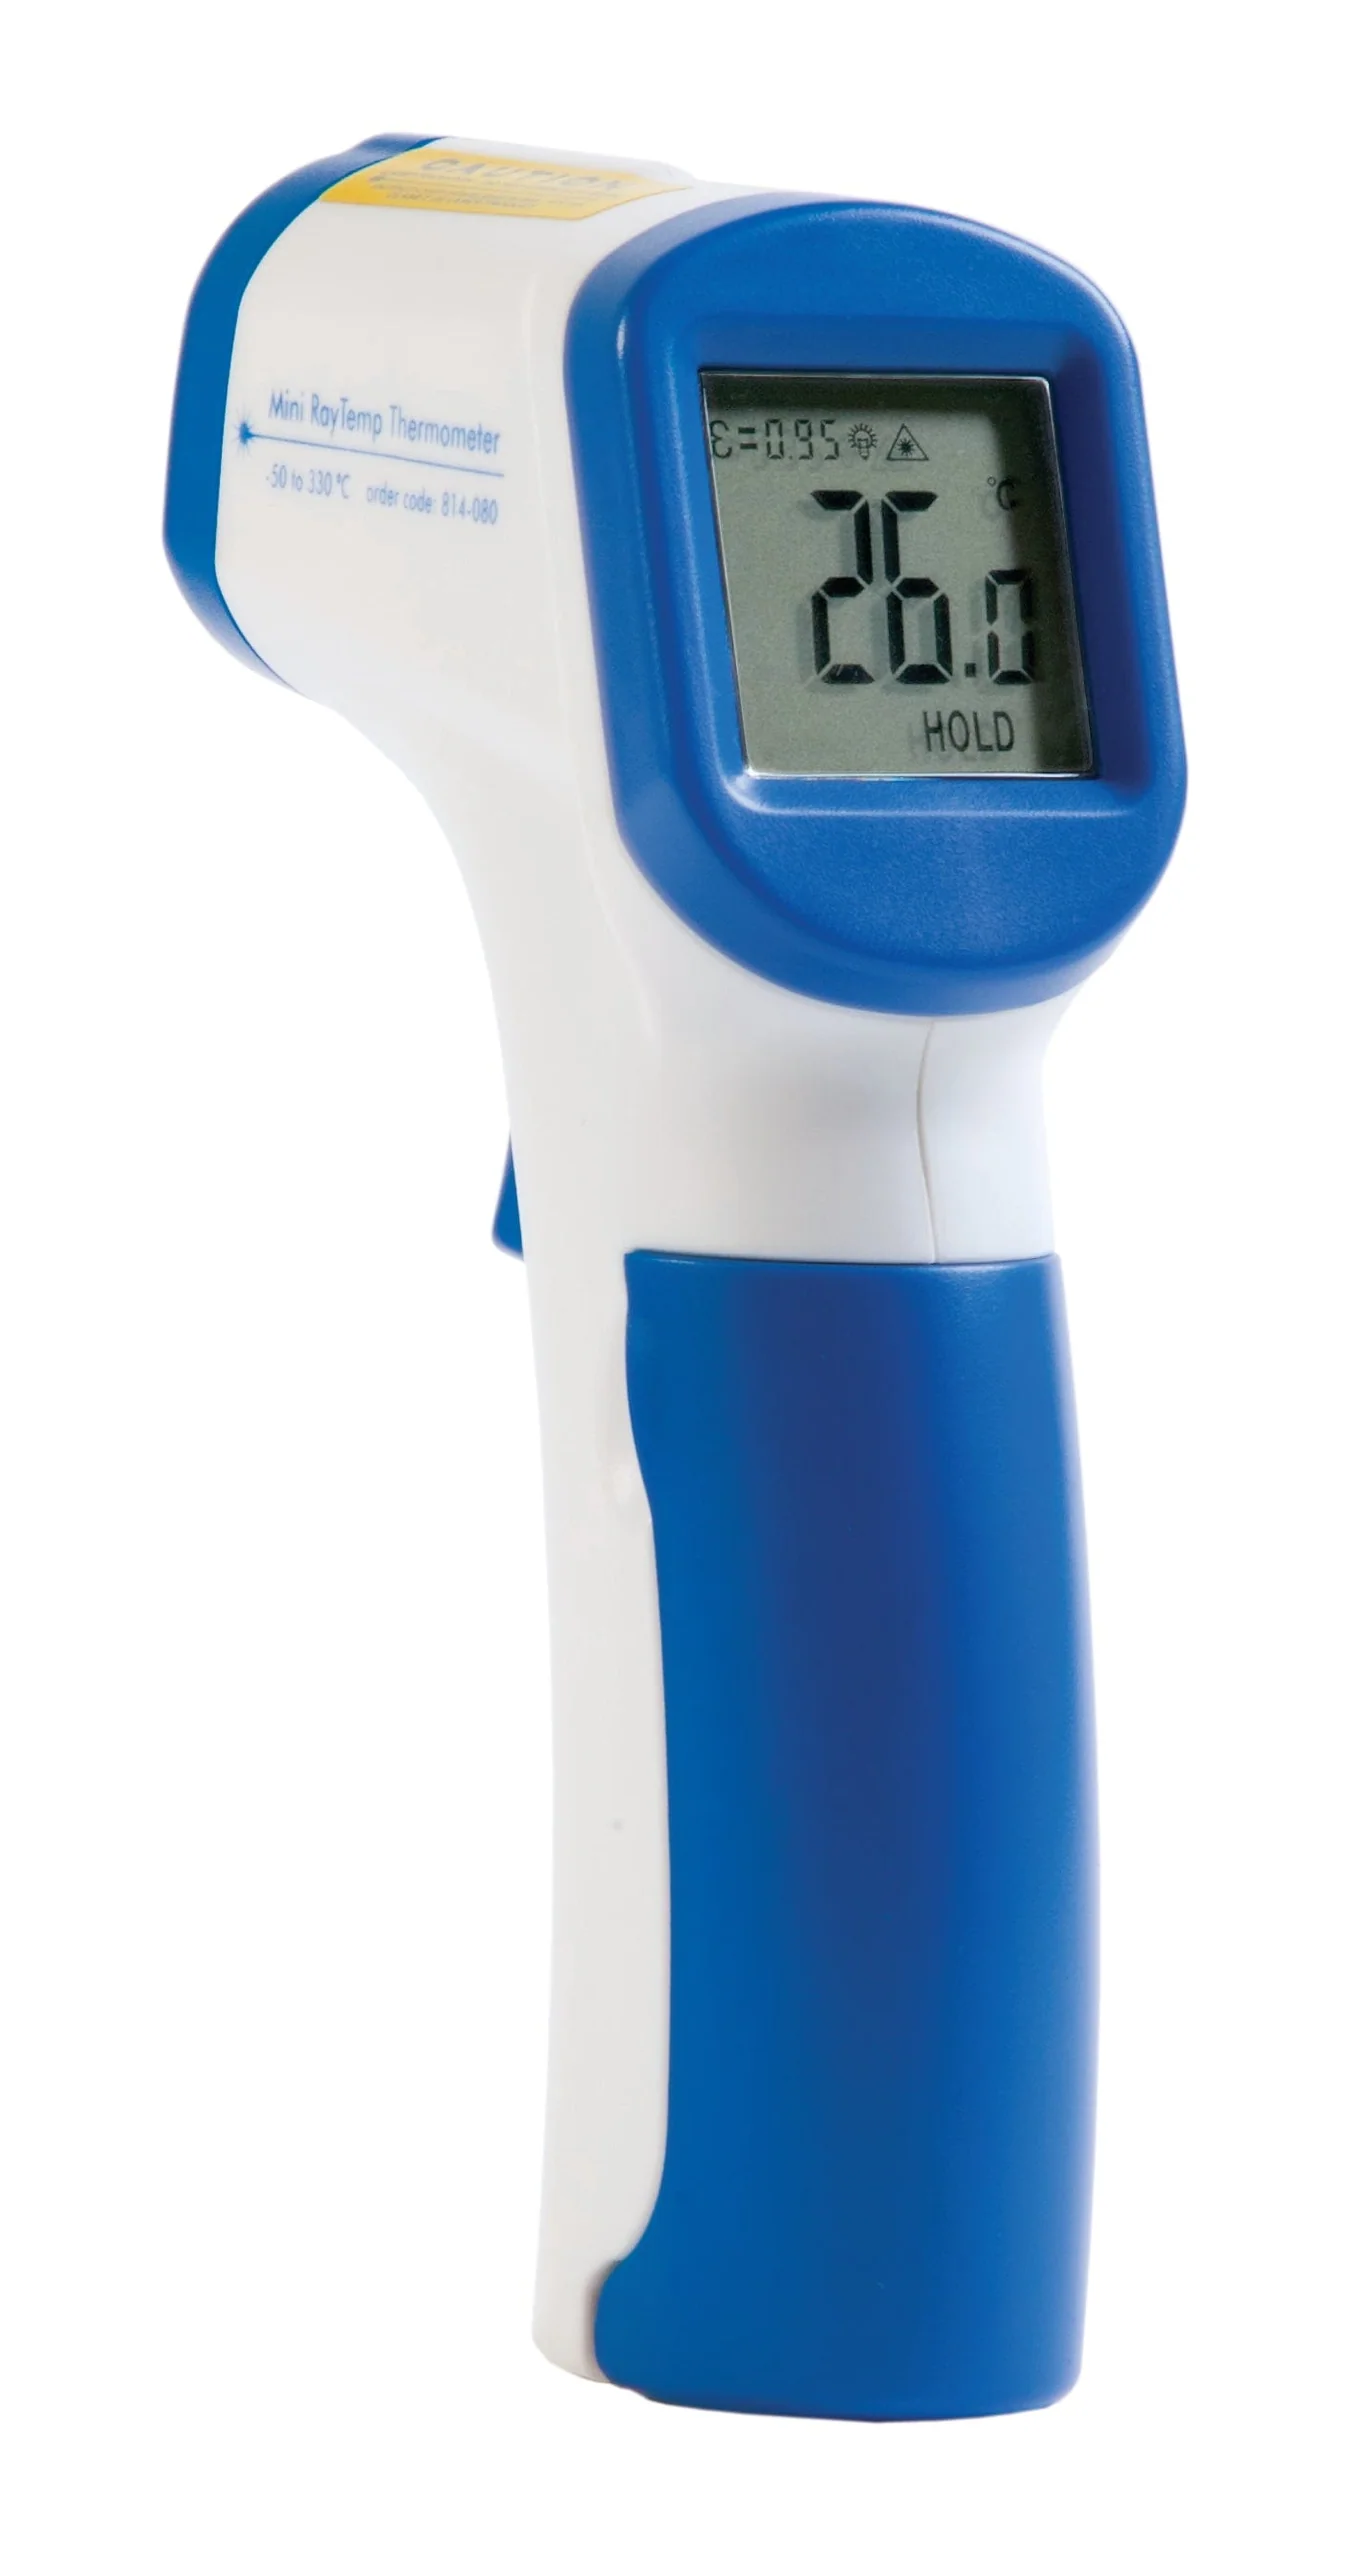 Mini infrared thermometer